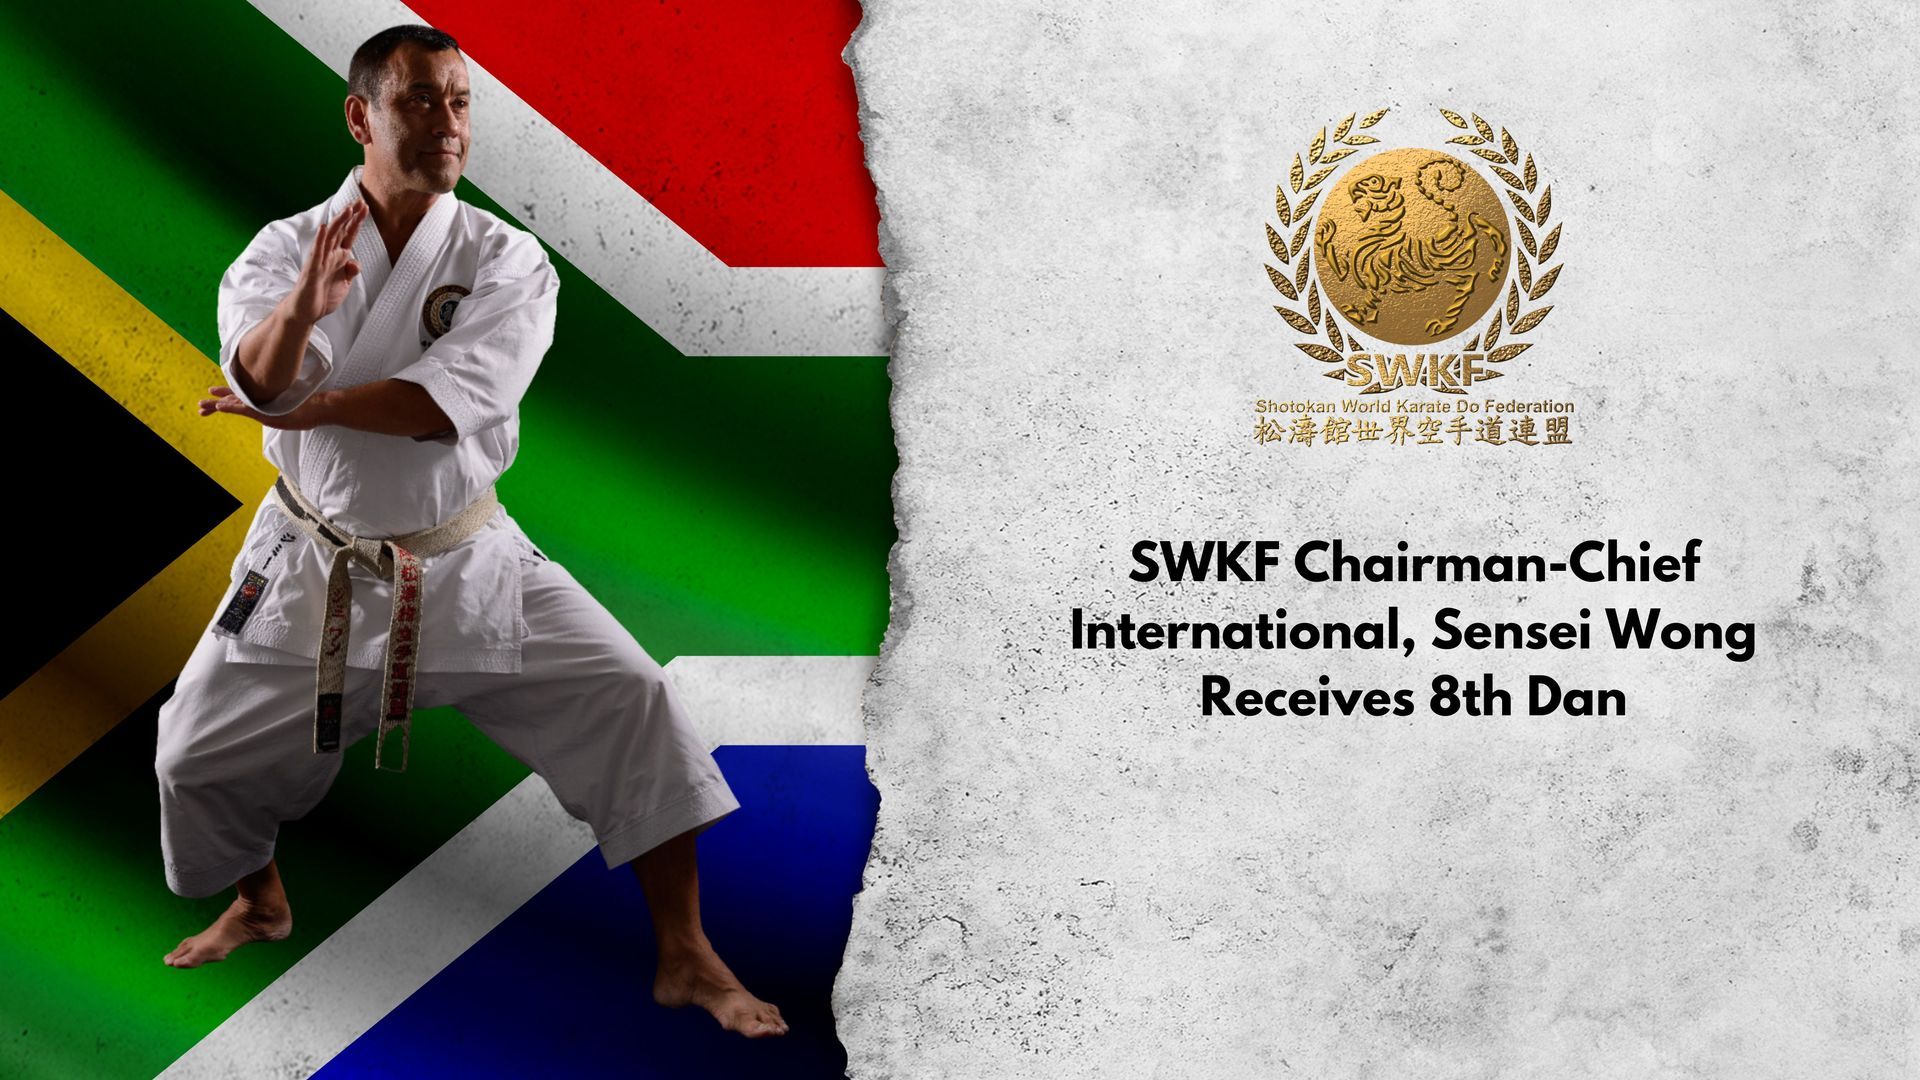 SWKF Chairman-Chief International, Sensei Wong Receives 8th Dan from South Africa